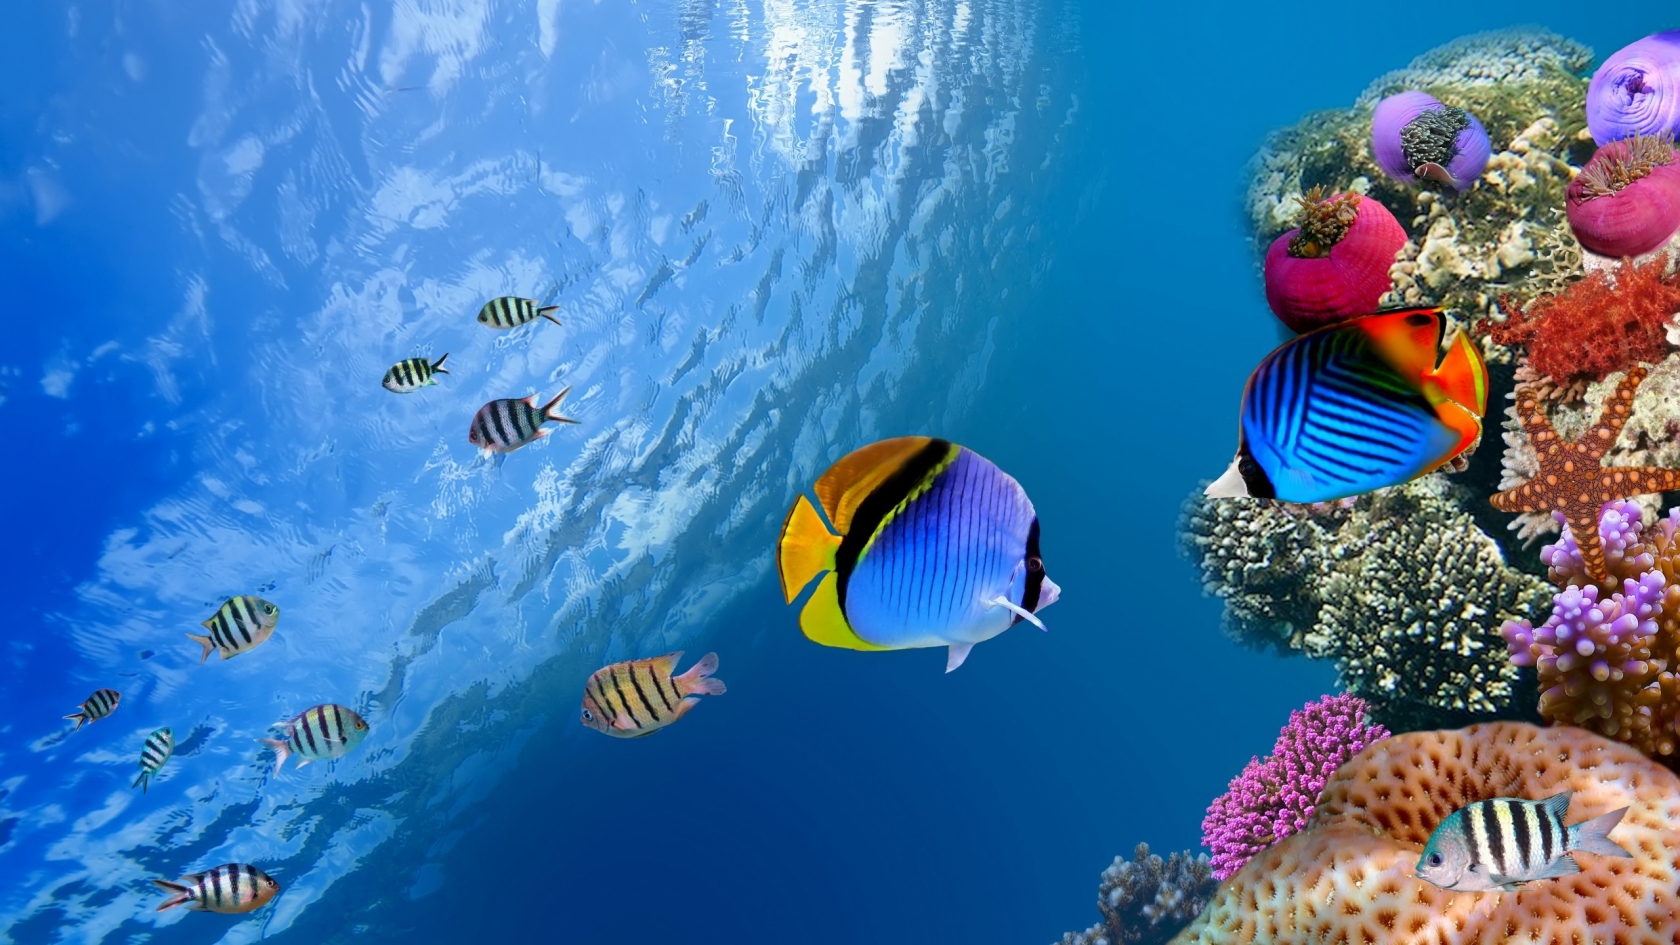 Underwater Coral Scene for 1680 x 945 HDTV resolution